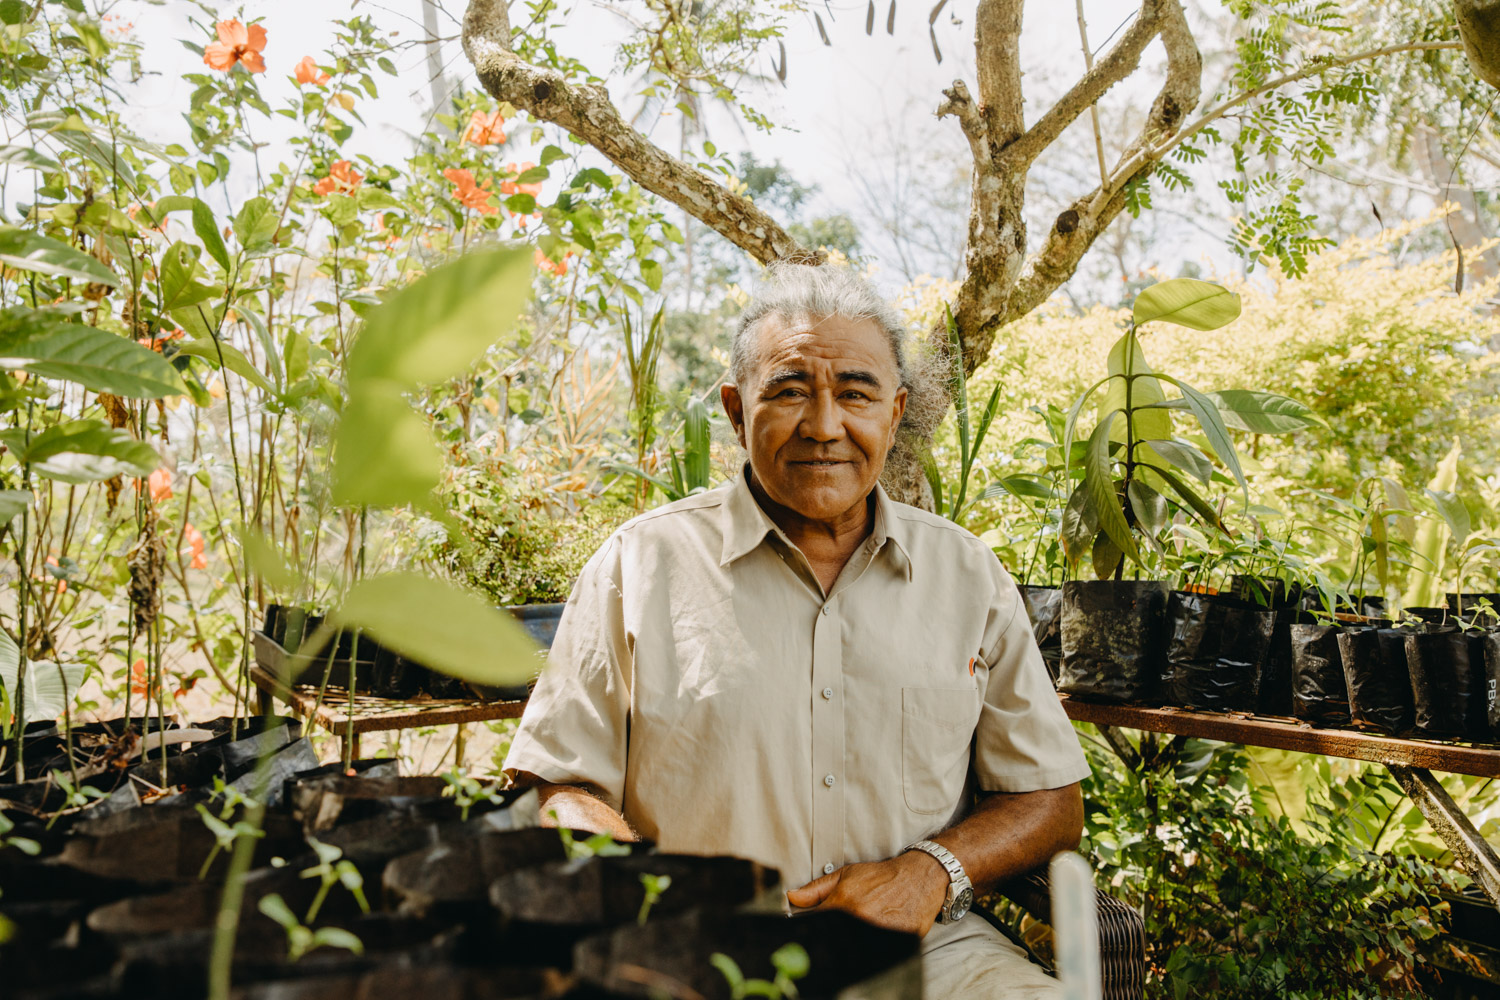 Ifieleeleplantation-Samoa-organicfarm-healthyeating-farmer-agriculture-documentary-photography-documentaryfilm-organicfarming-4